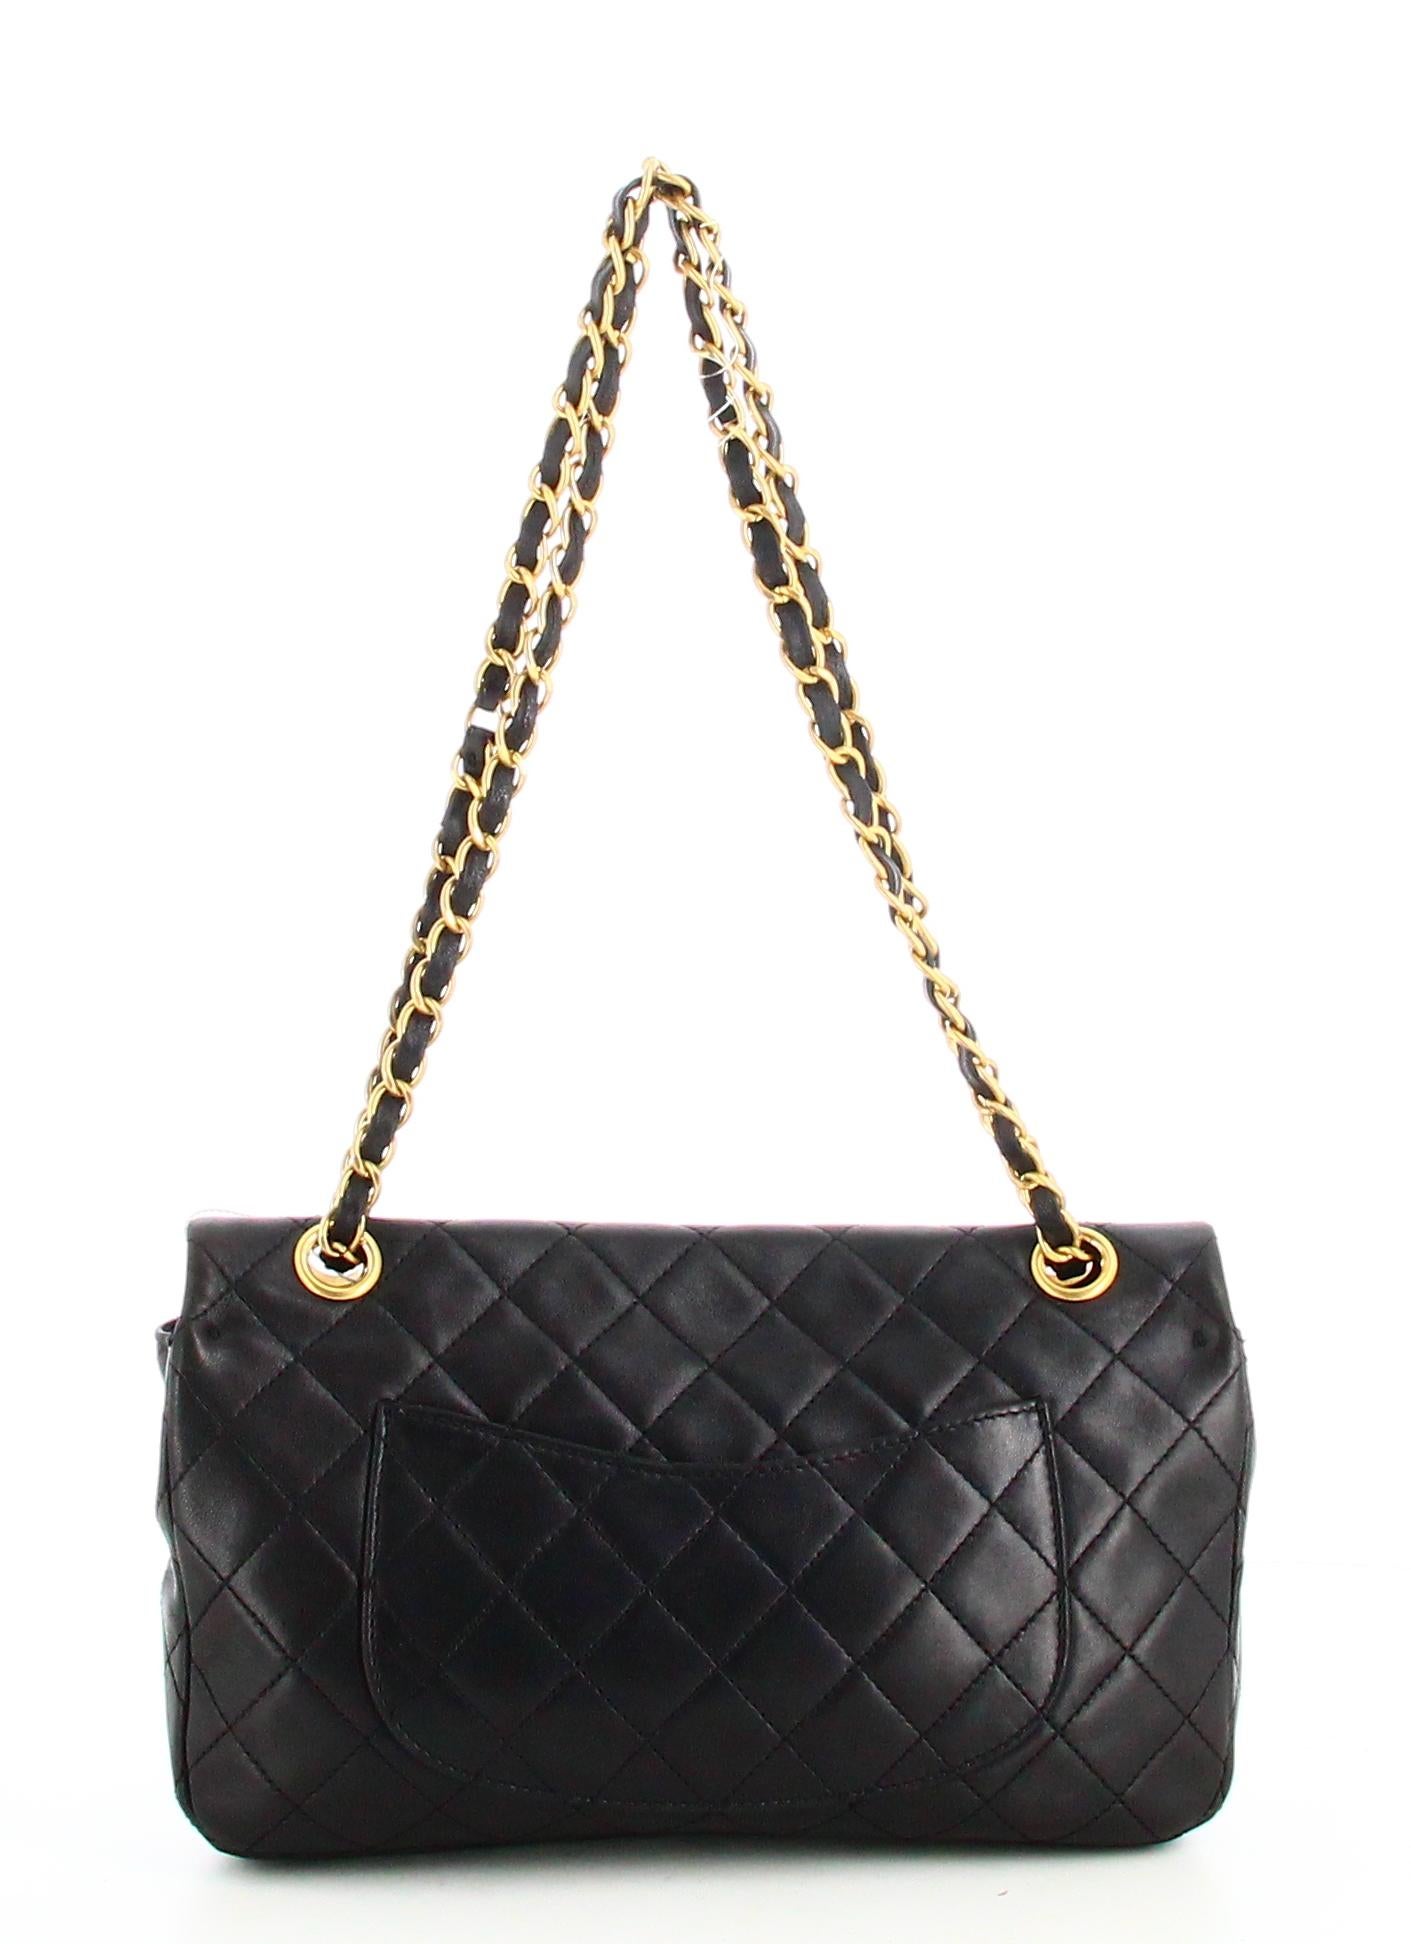 2010 Chanel Medium Classic Lambskin Single Flap Handbag For Sale 2